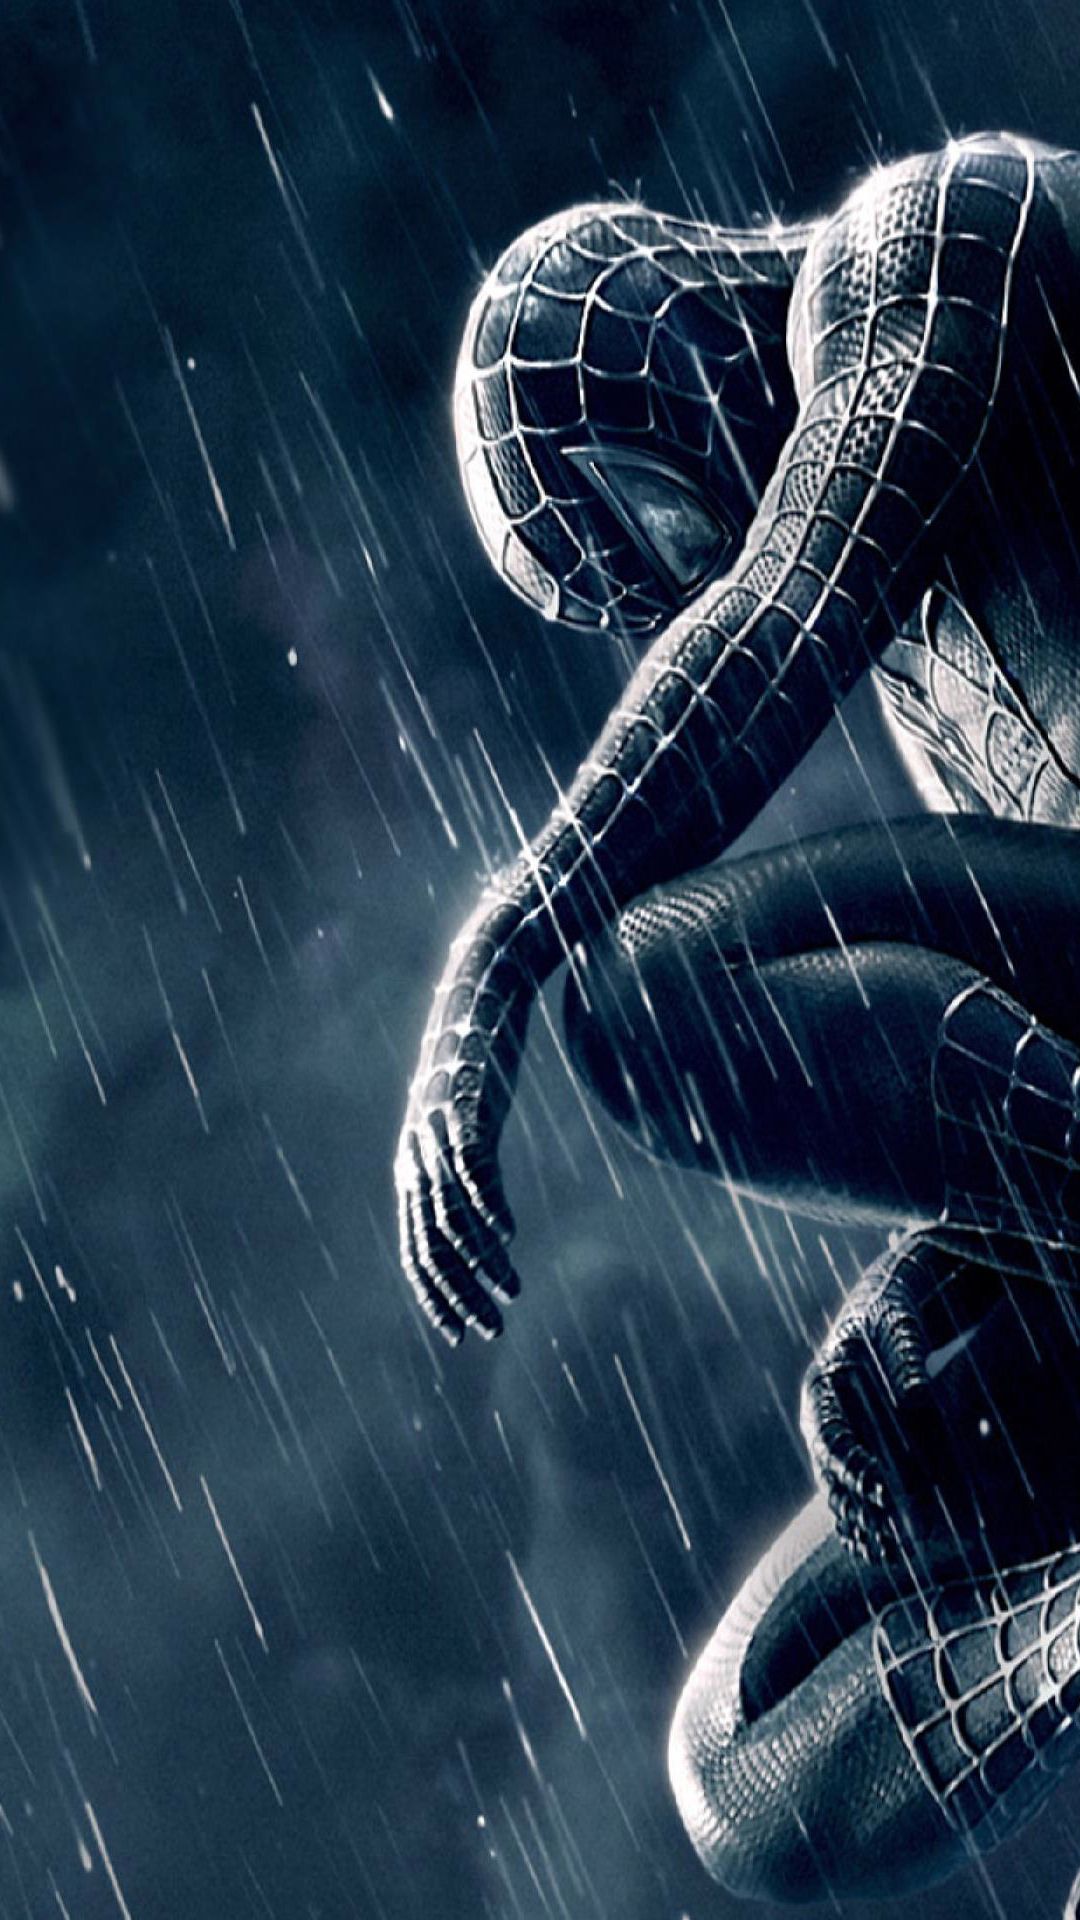 Spiderman 3 Rain Android Wallpaper free download